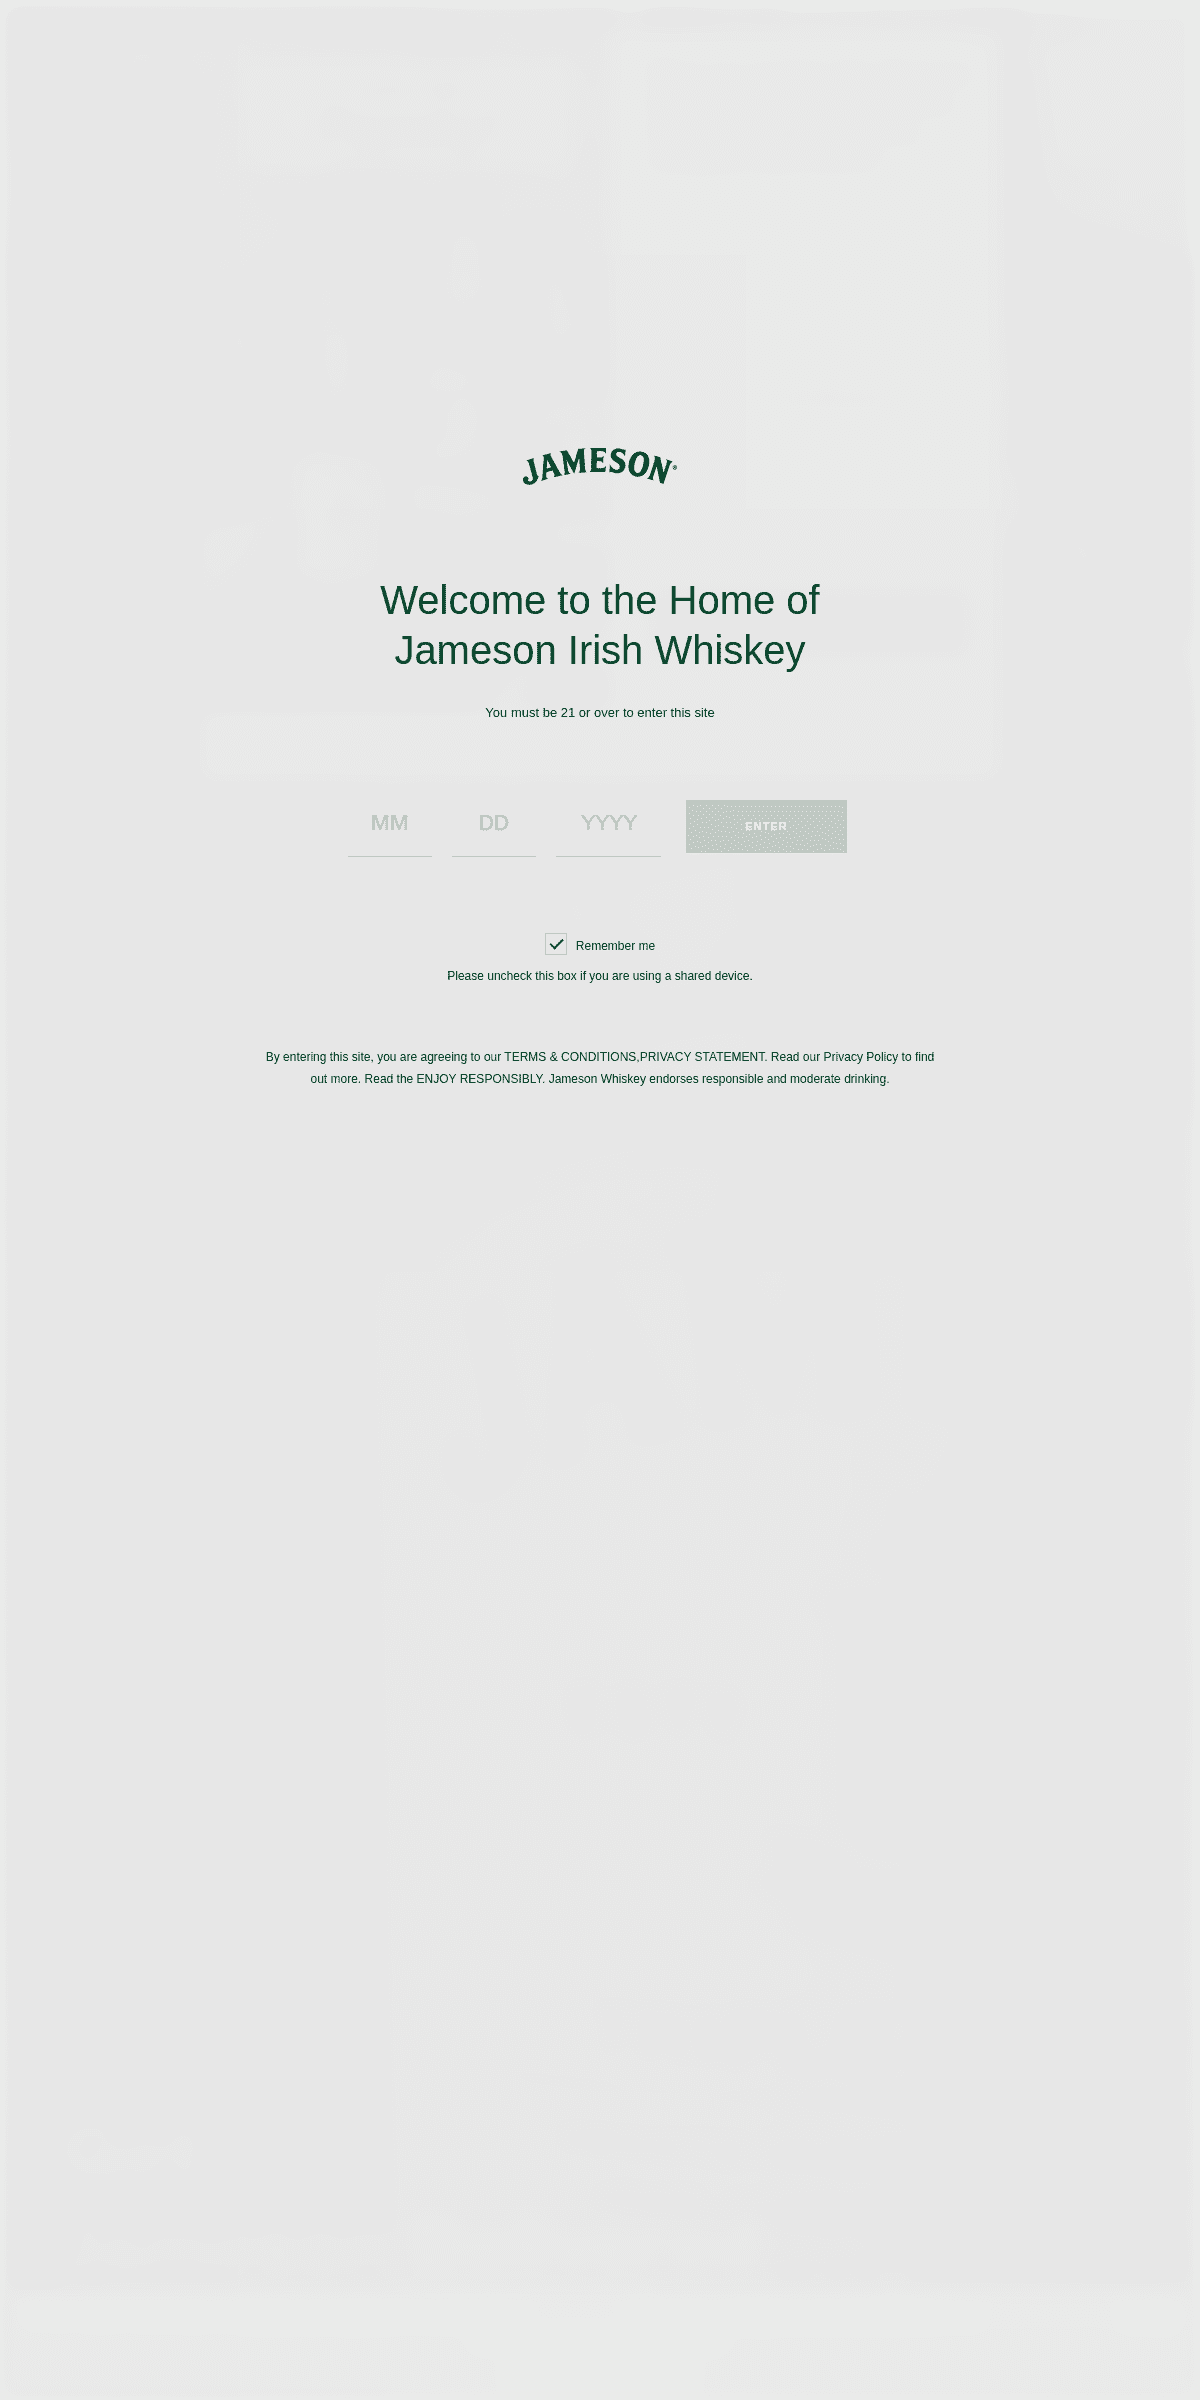 A complete backup of jamesonwhiskey.com